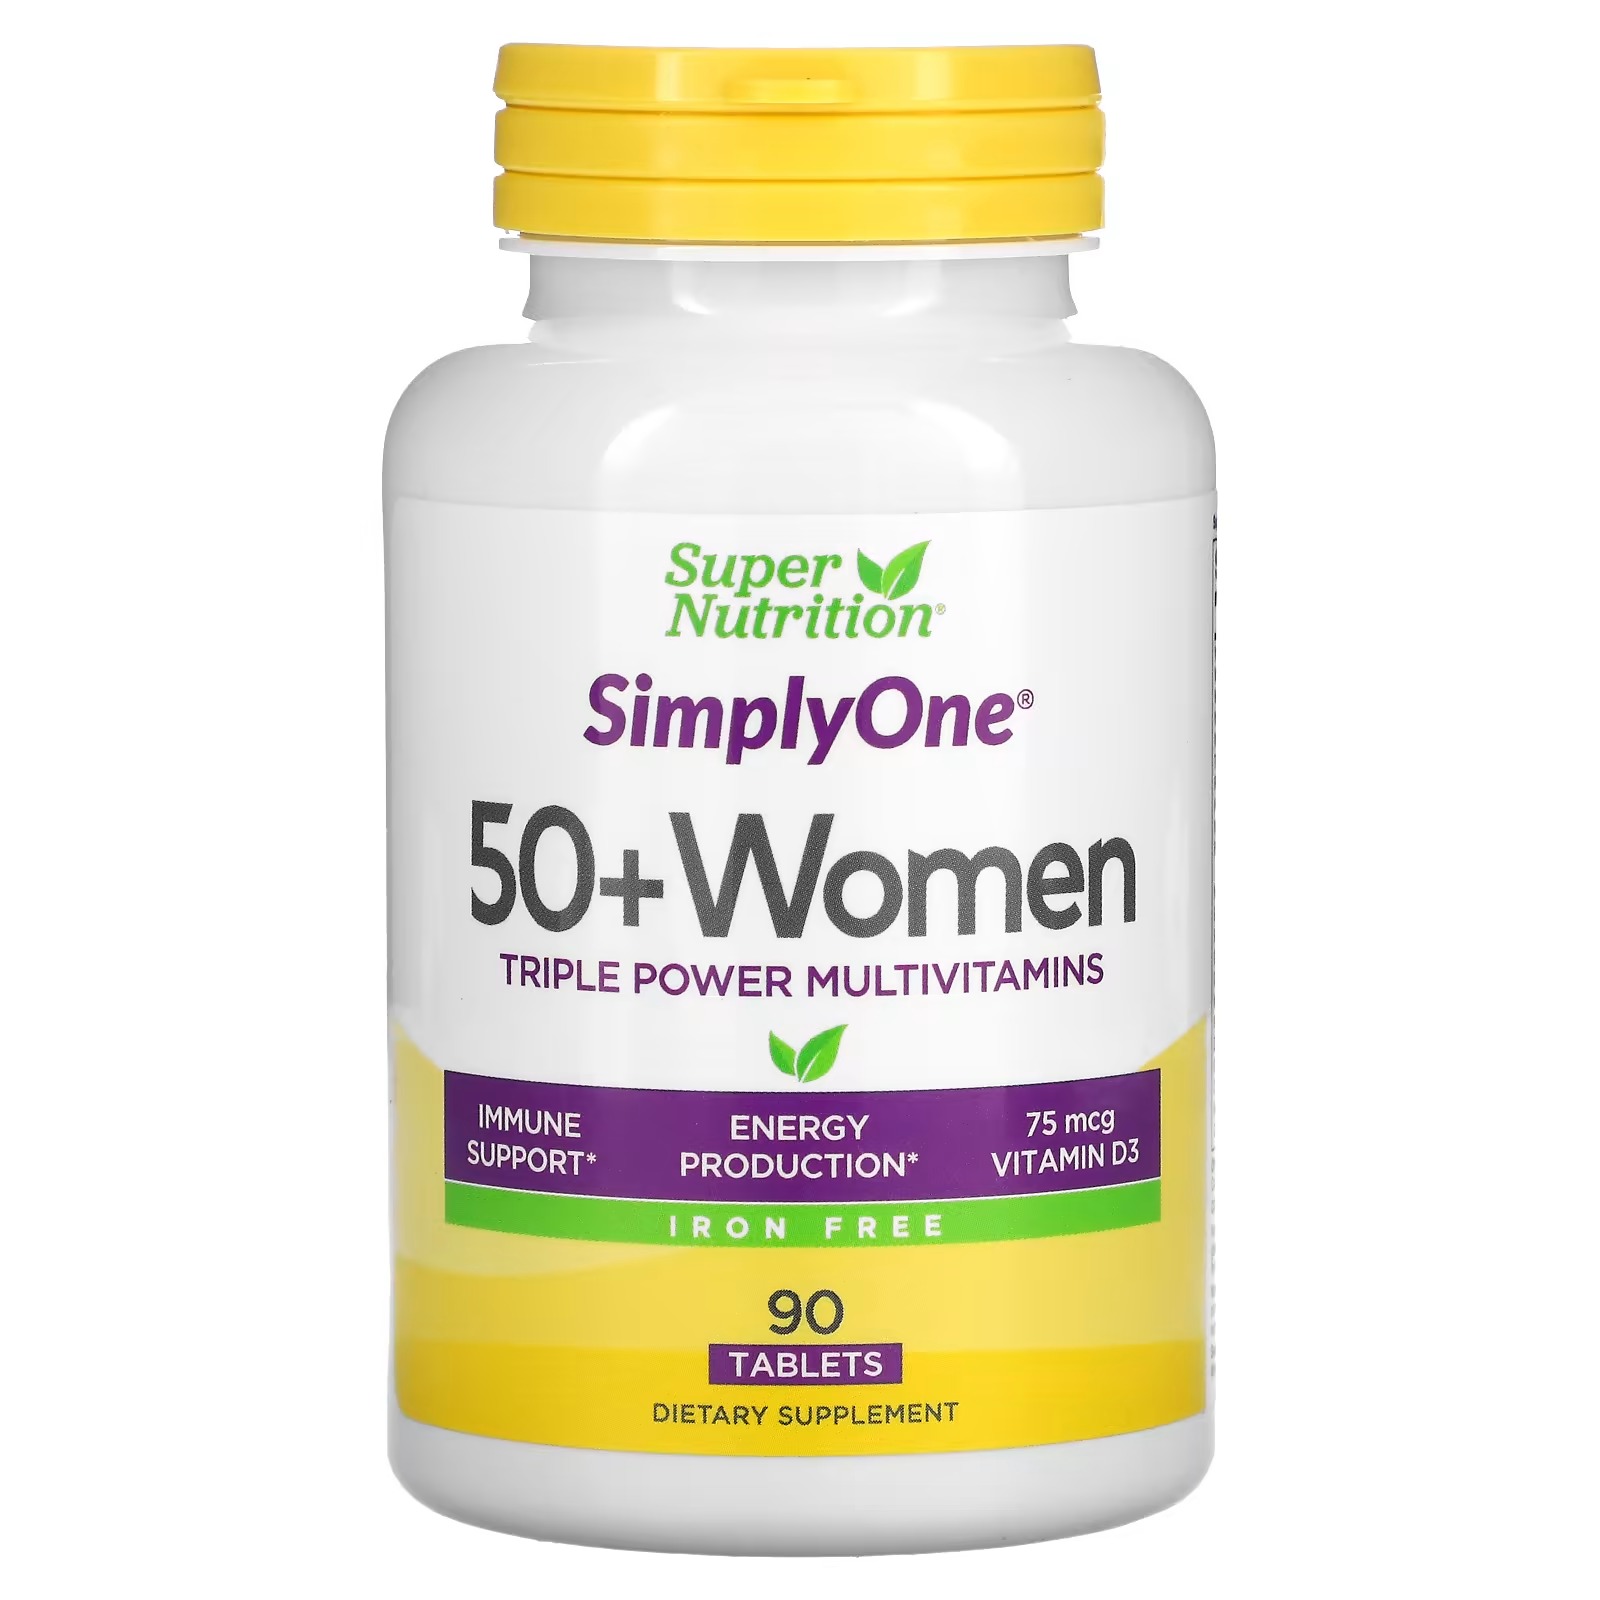 Мультивитамины Super Nutrition Triple Power для женщин старше 50 лет, 90 таблеток